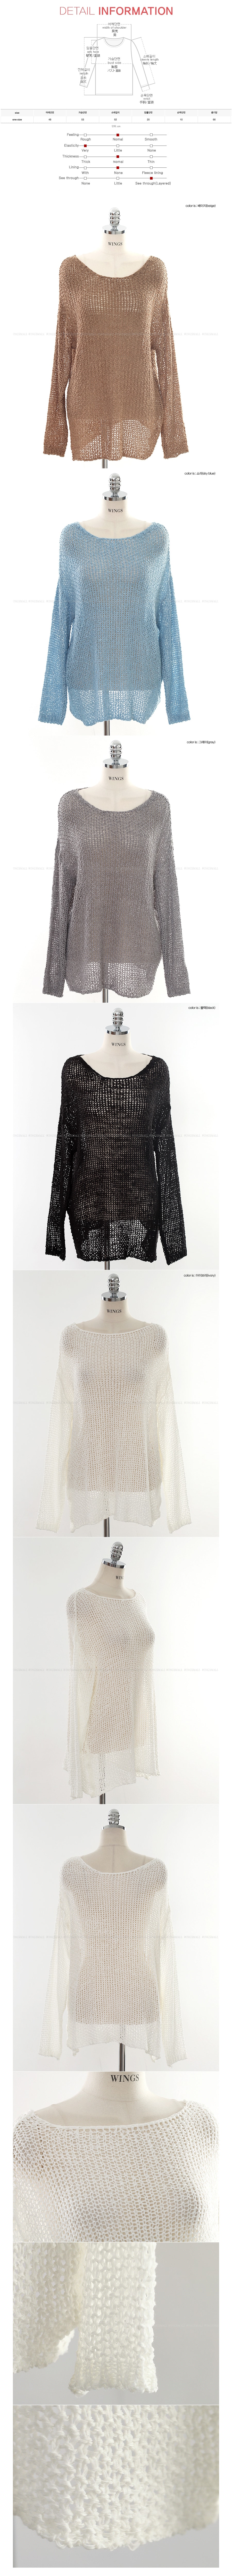 WINGS Loose Sheer Crochet Knit Top #Grey One Size(Free)